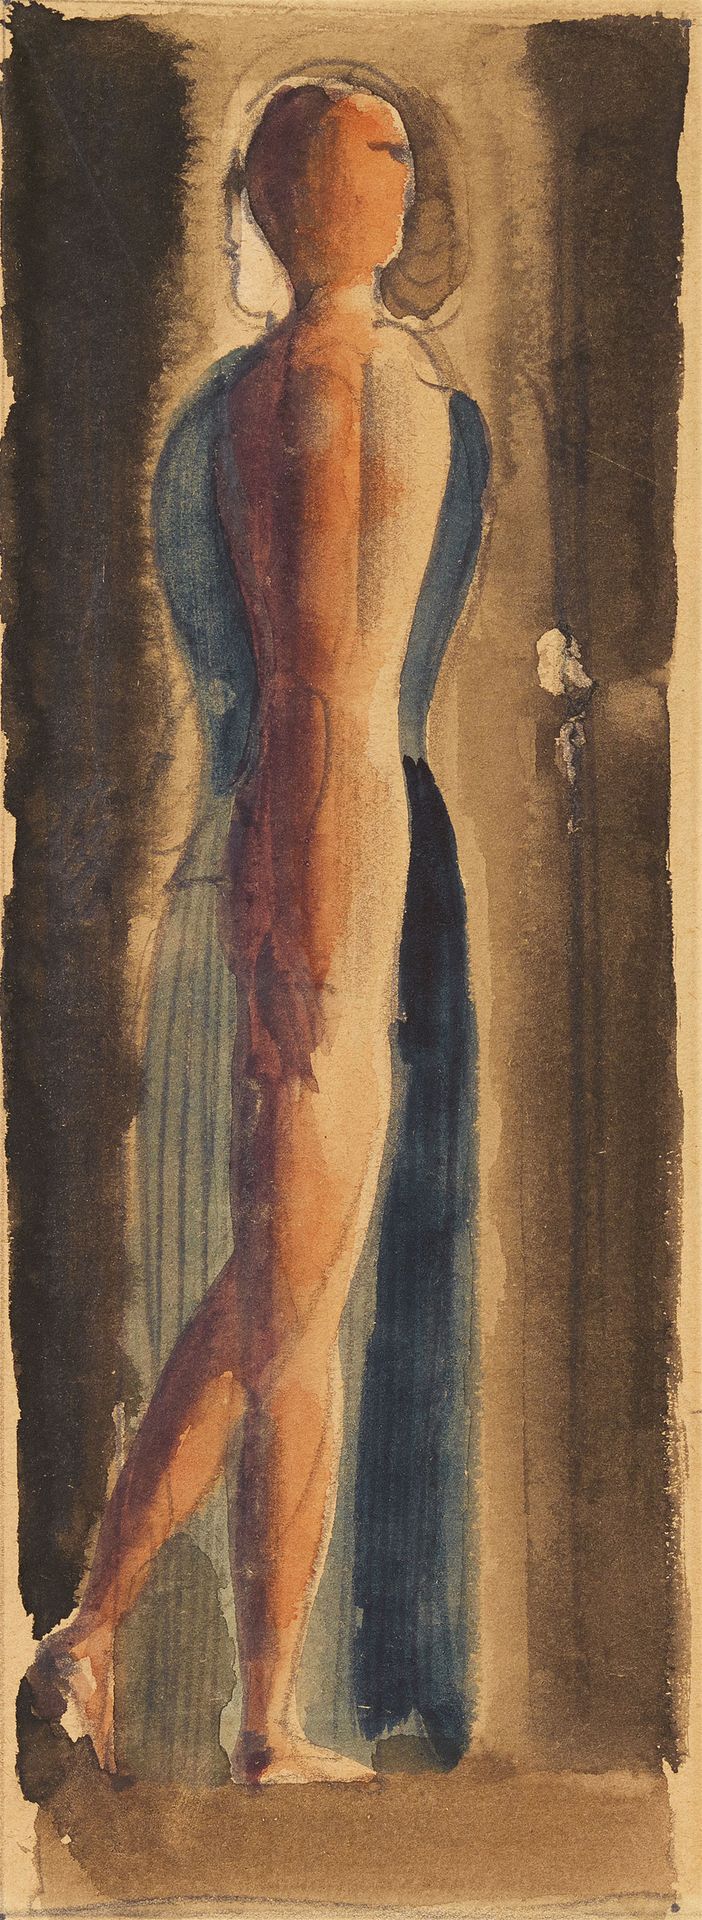 Oskar Schlemmer Oskar Schlemmer







Desnudo y mujer



Alrededor de 1925




&hellip;